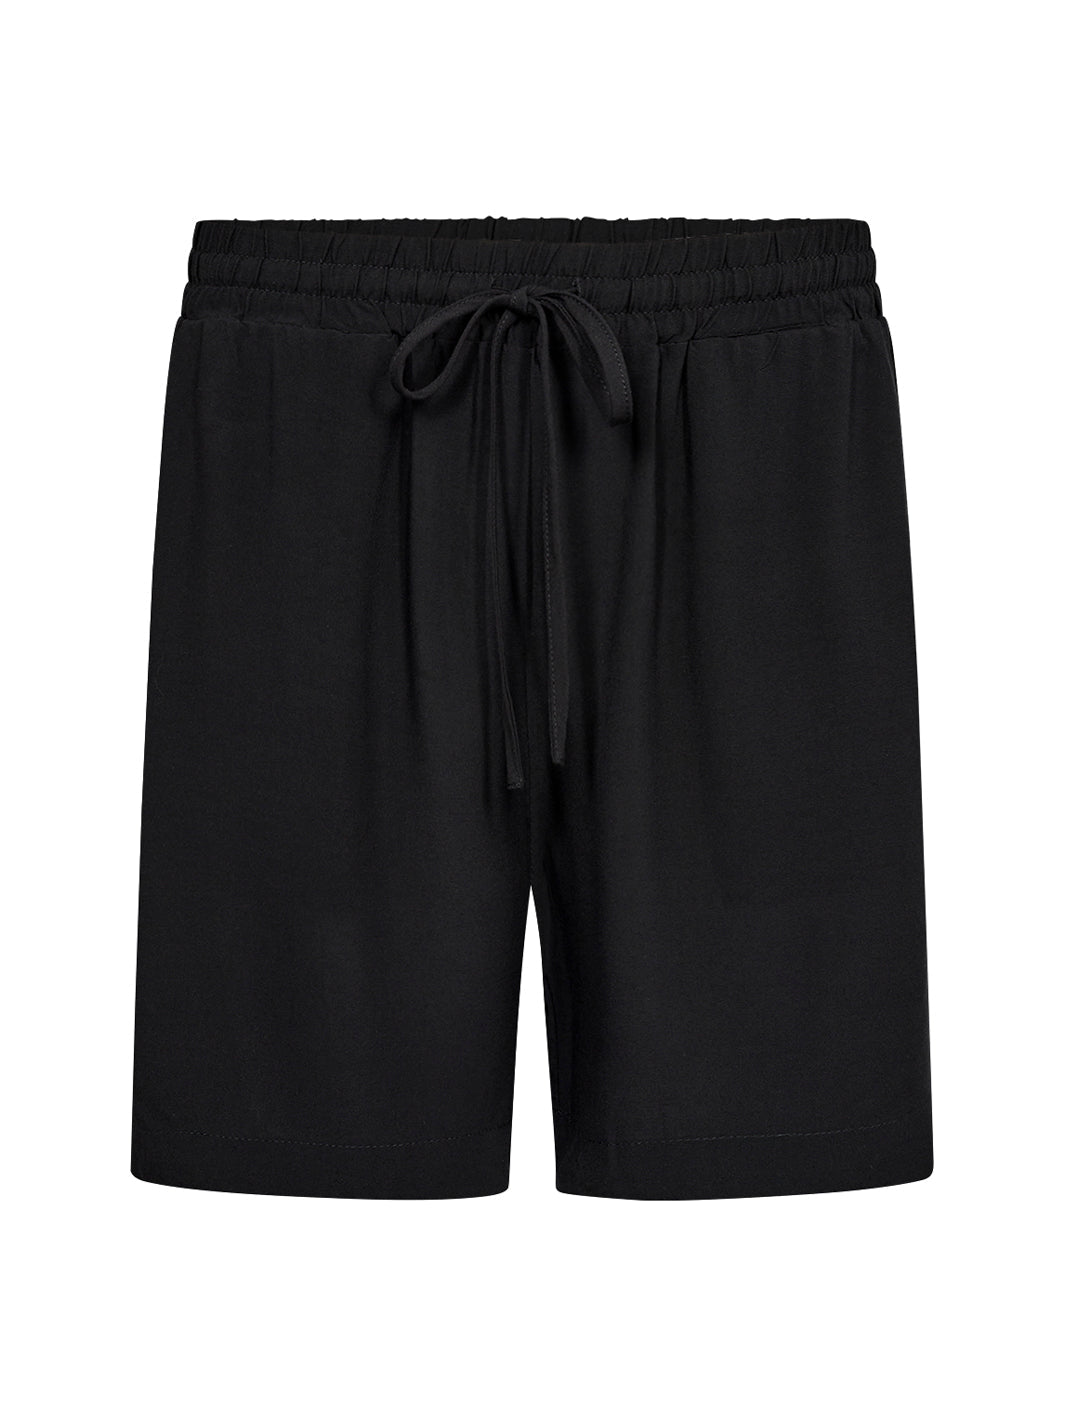 Soya Concept Radia 163 shorts black - Online-Mode